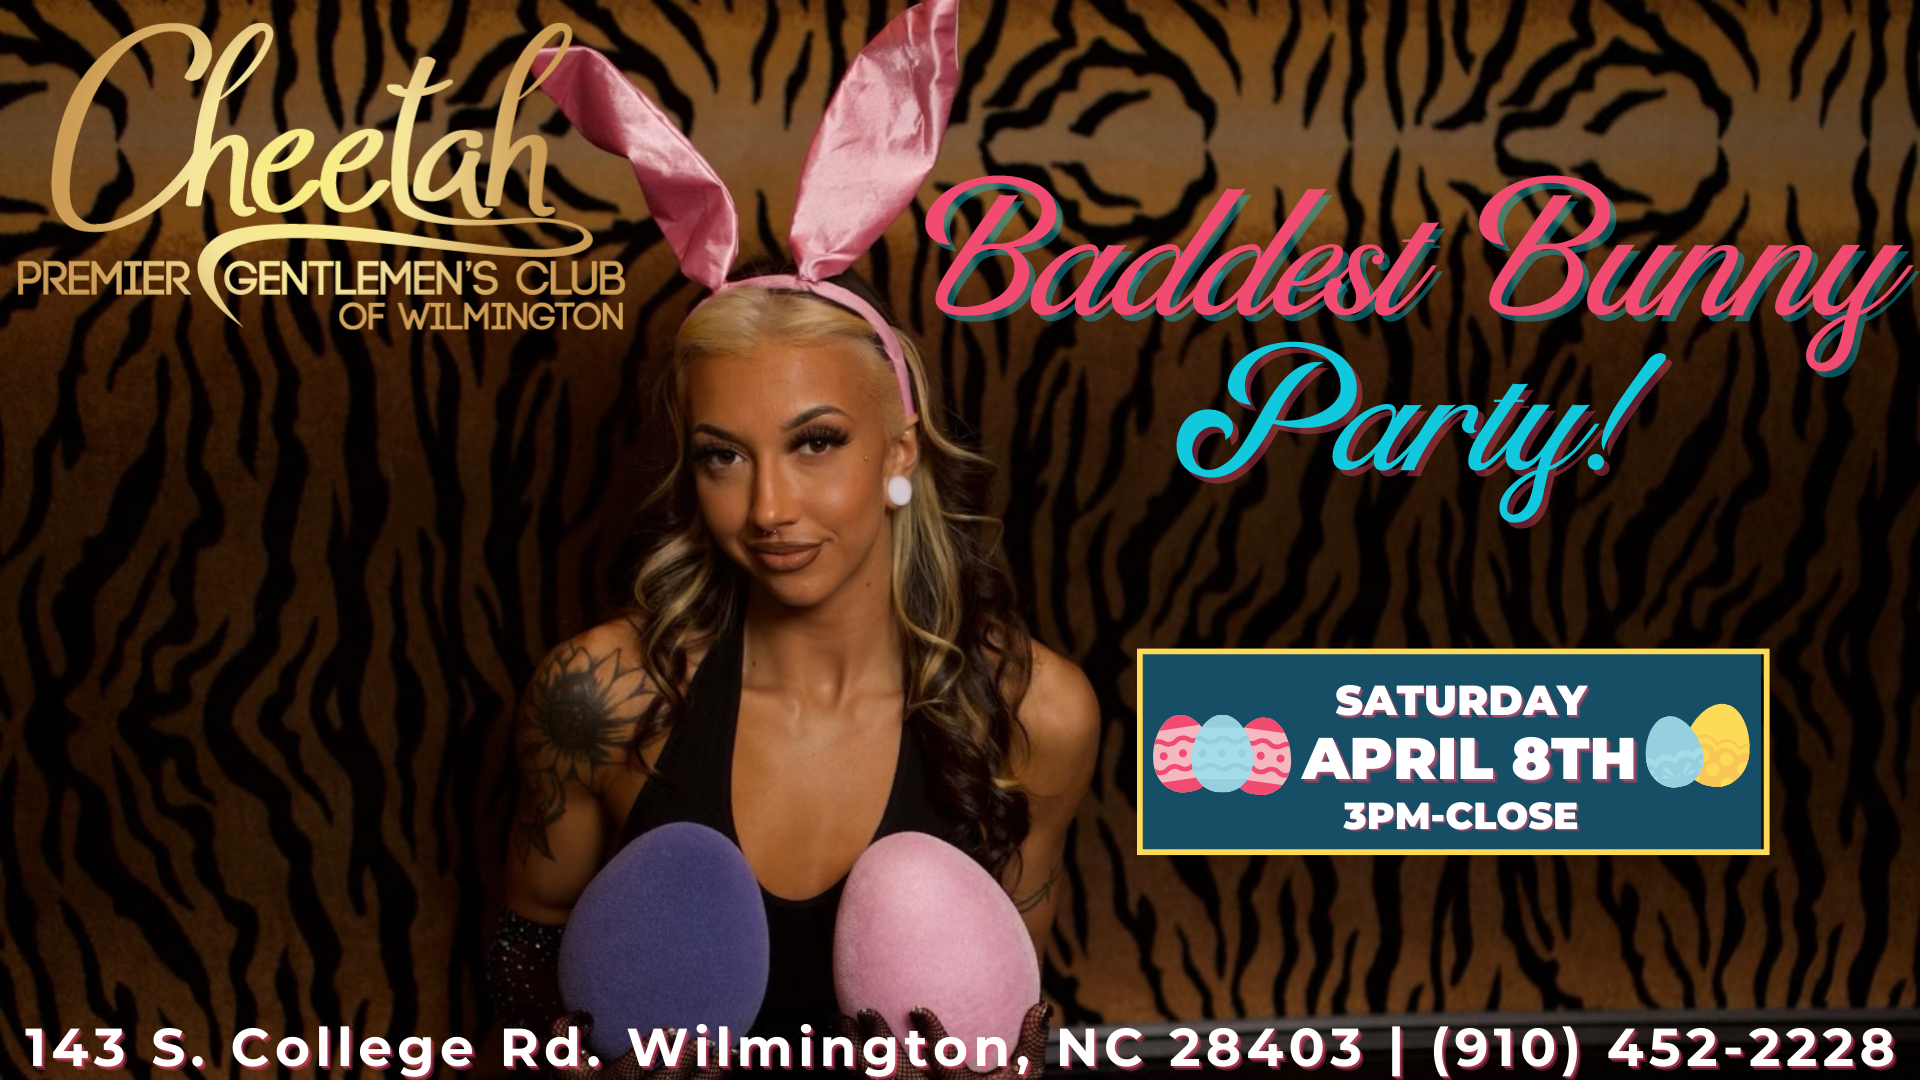 Baddest Bunny Party